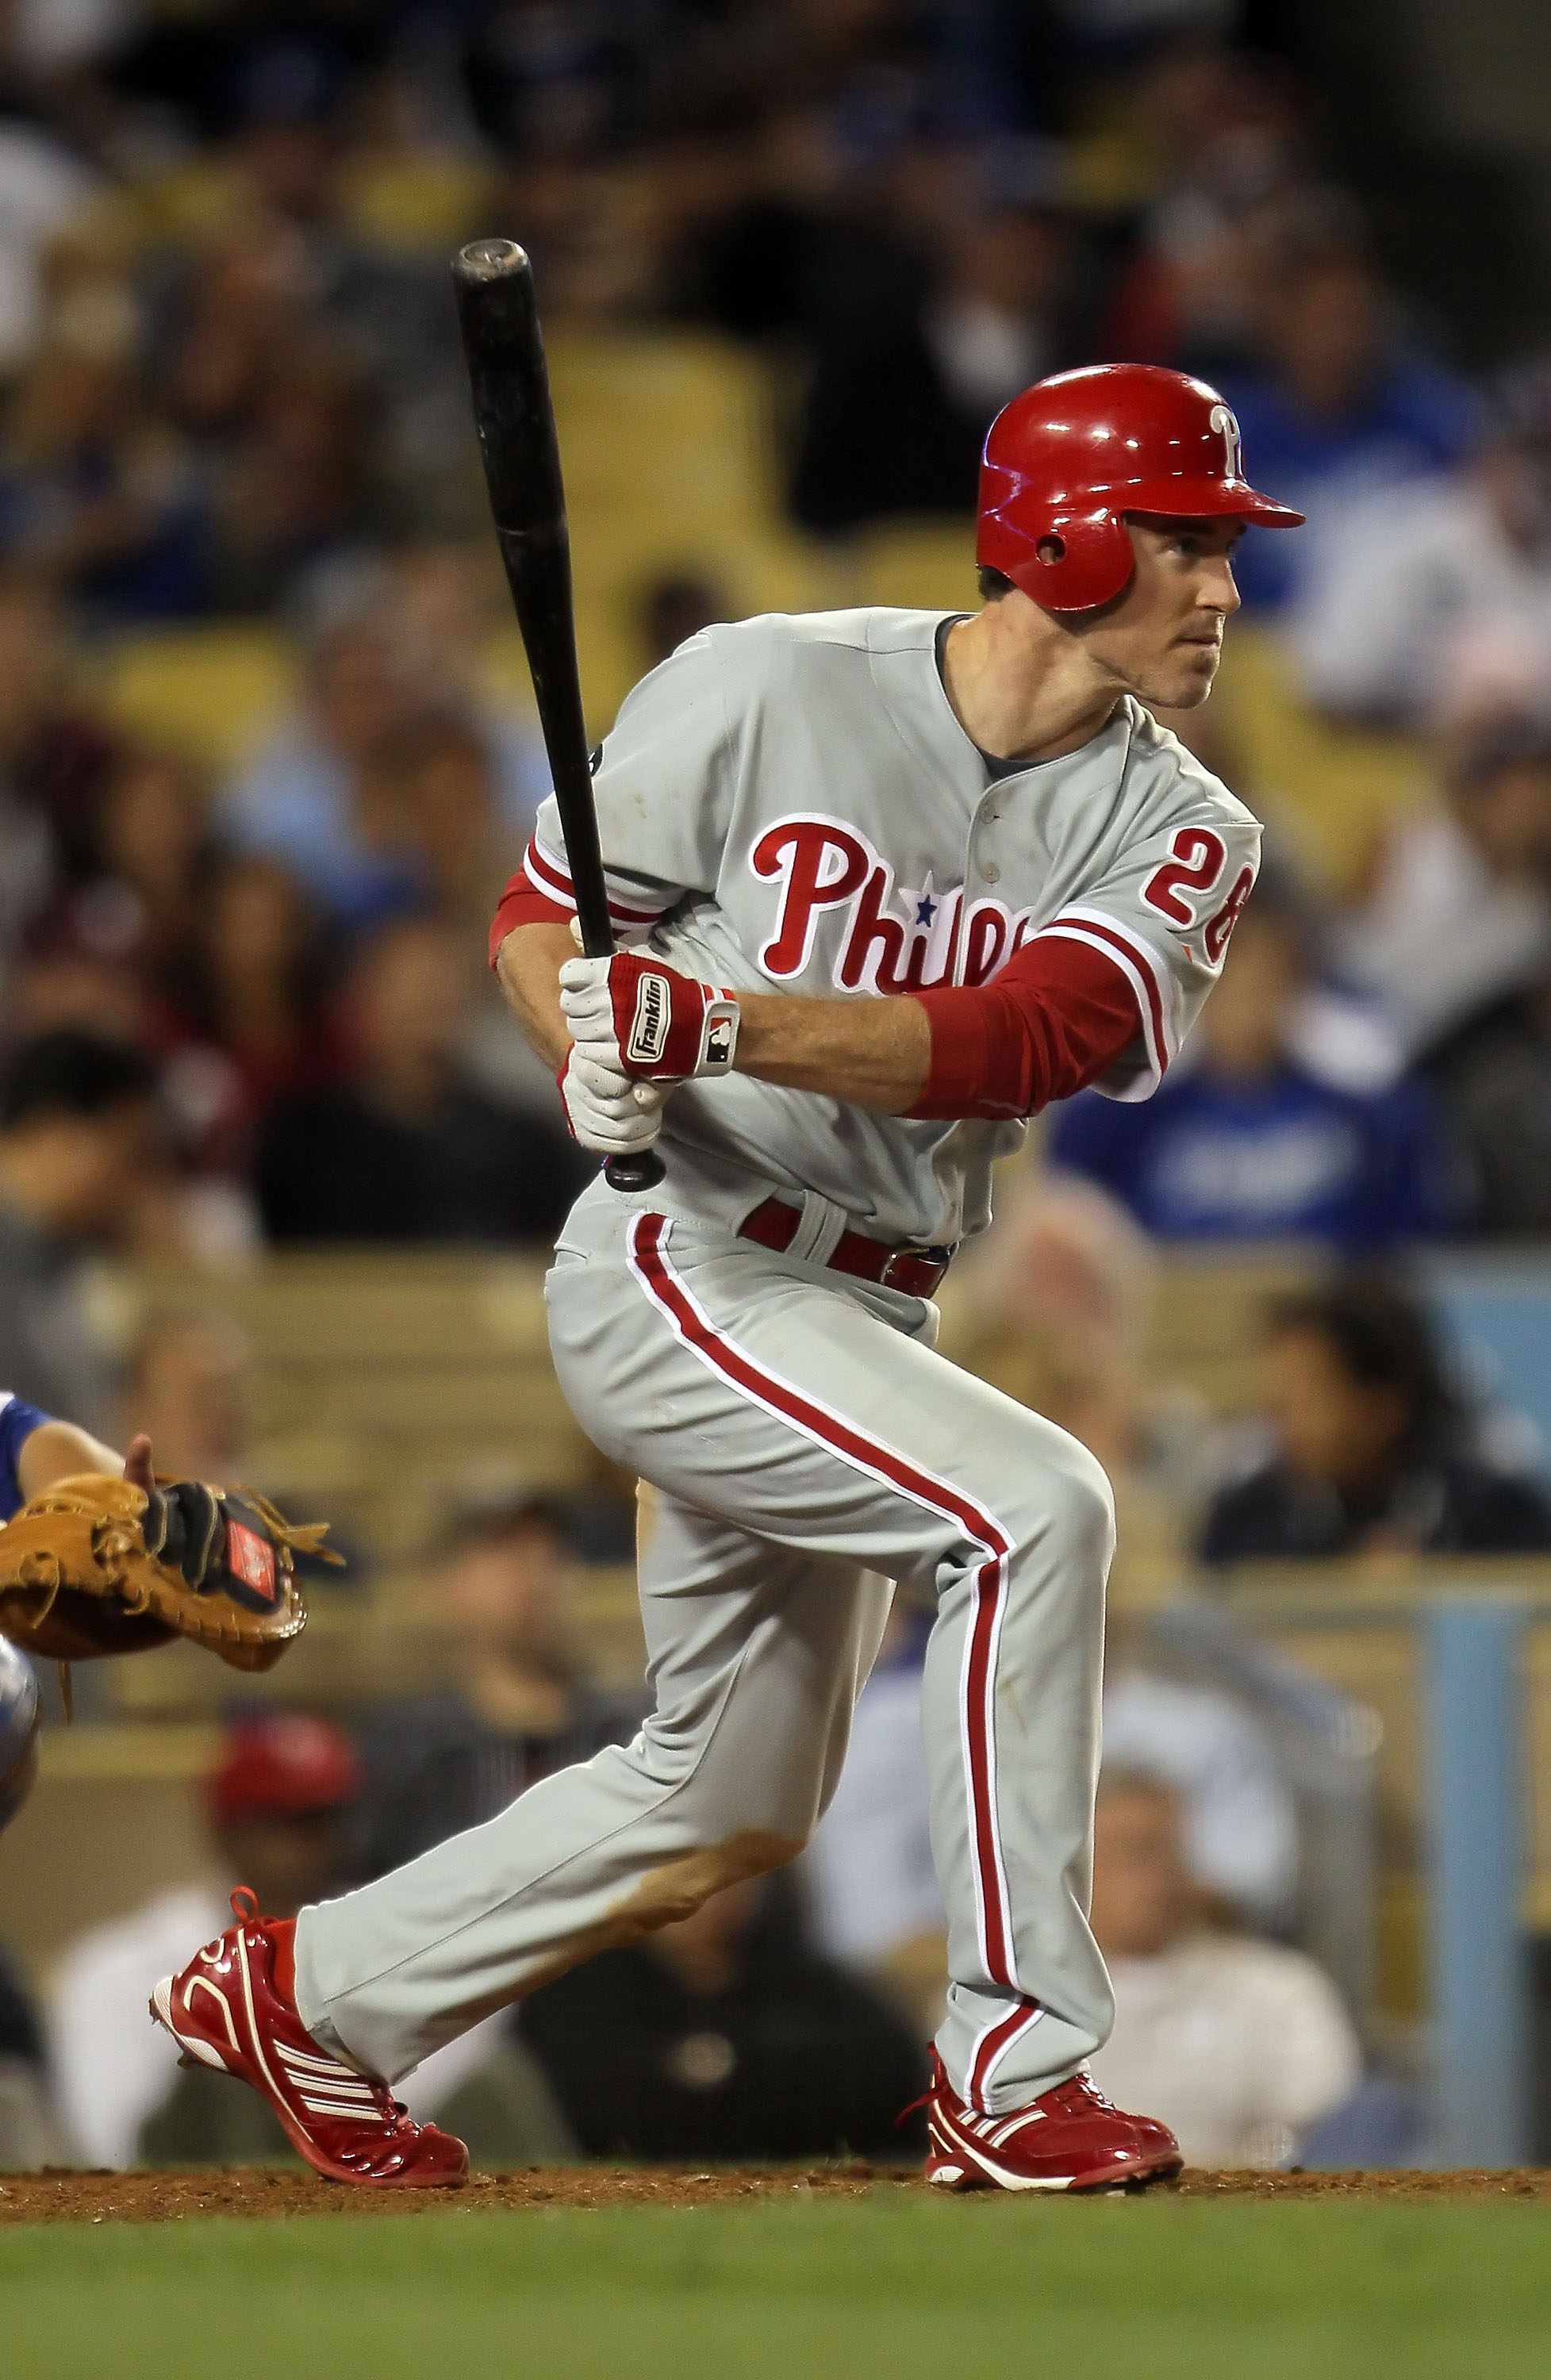 Phillies legend Cole Hamels aims for MLB return, impresses in workout